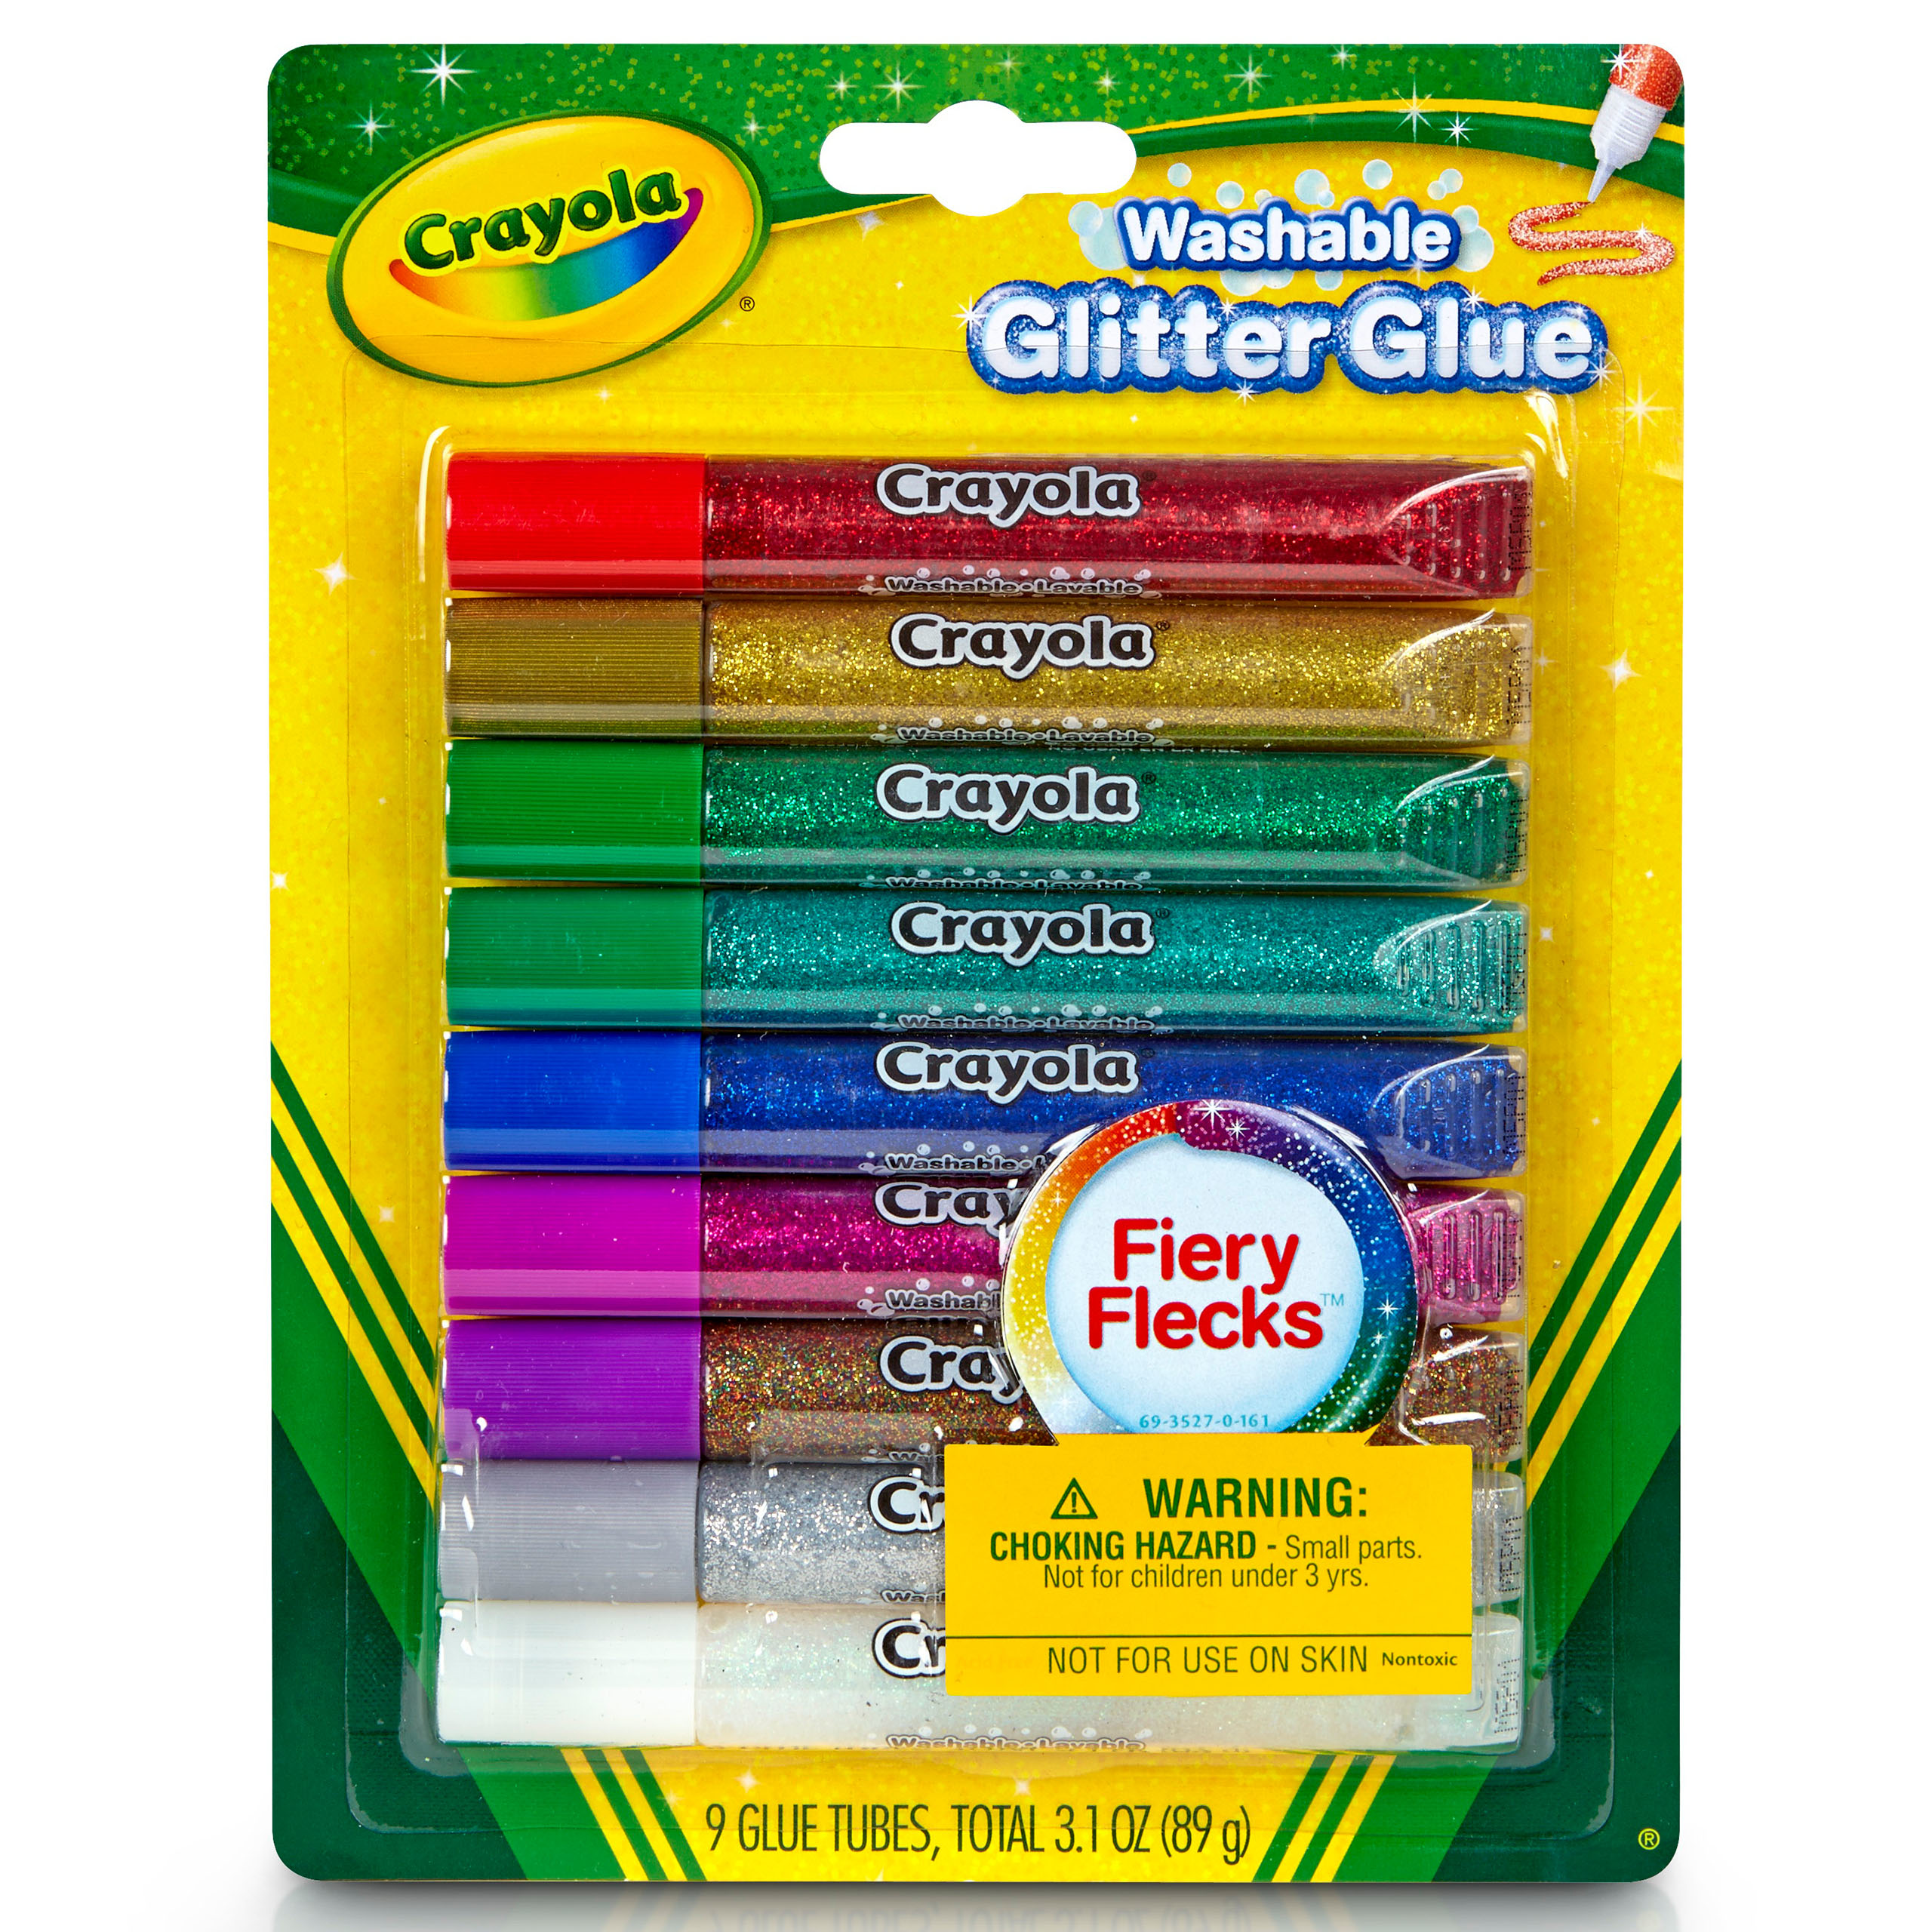 Crayola Washable Glitter Glue - 9 Colors